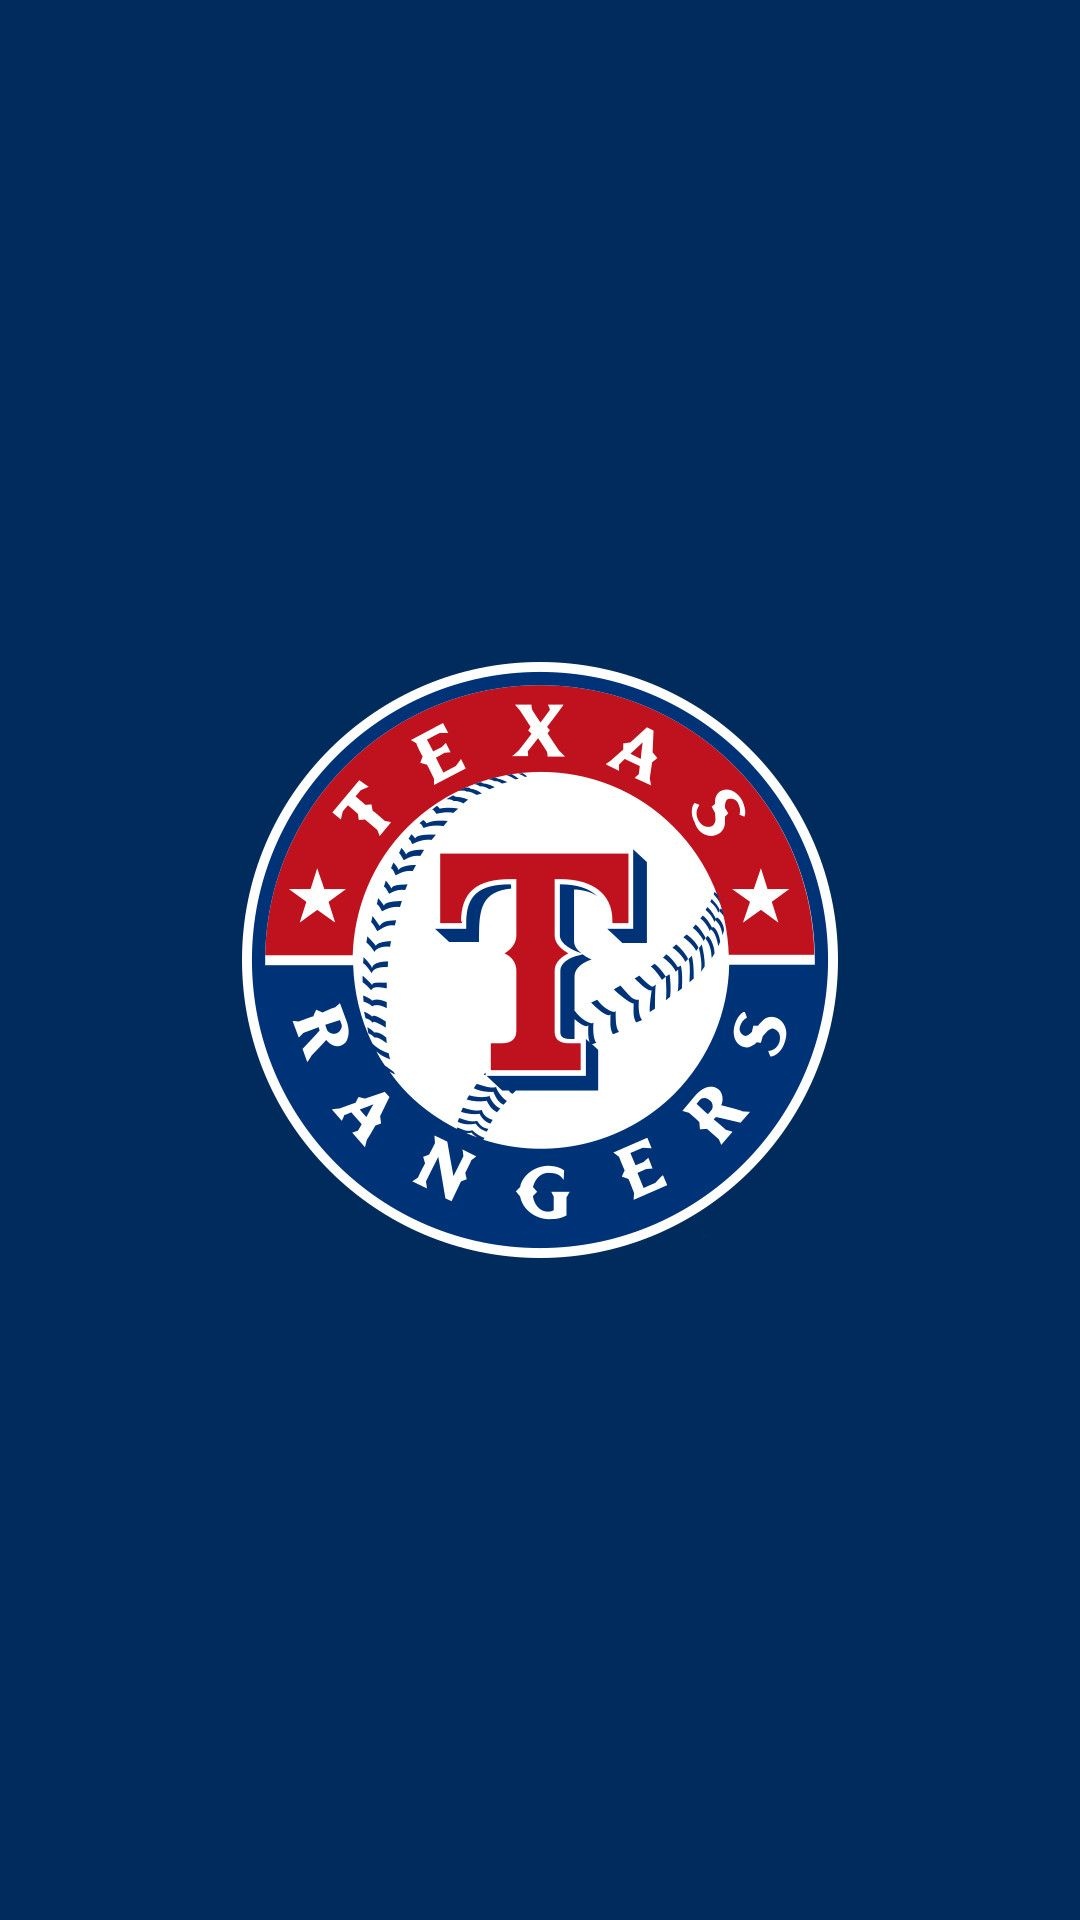 Texas Rangers wallpapers, Top backgrounds, 1080x1920 Full HD Handy